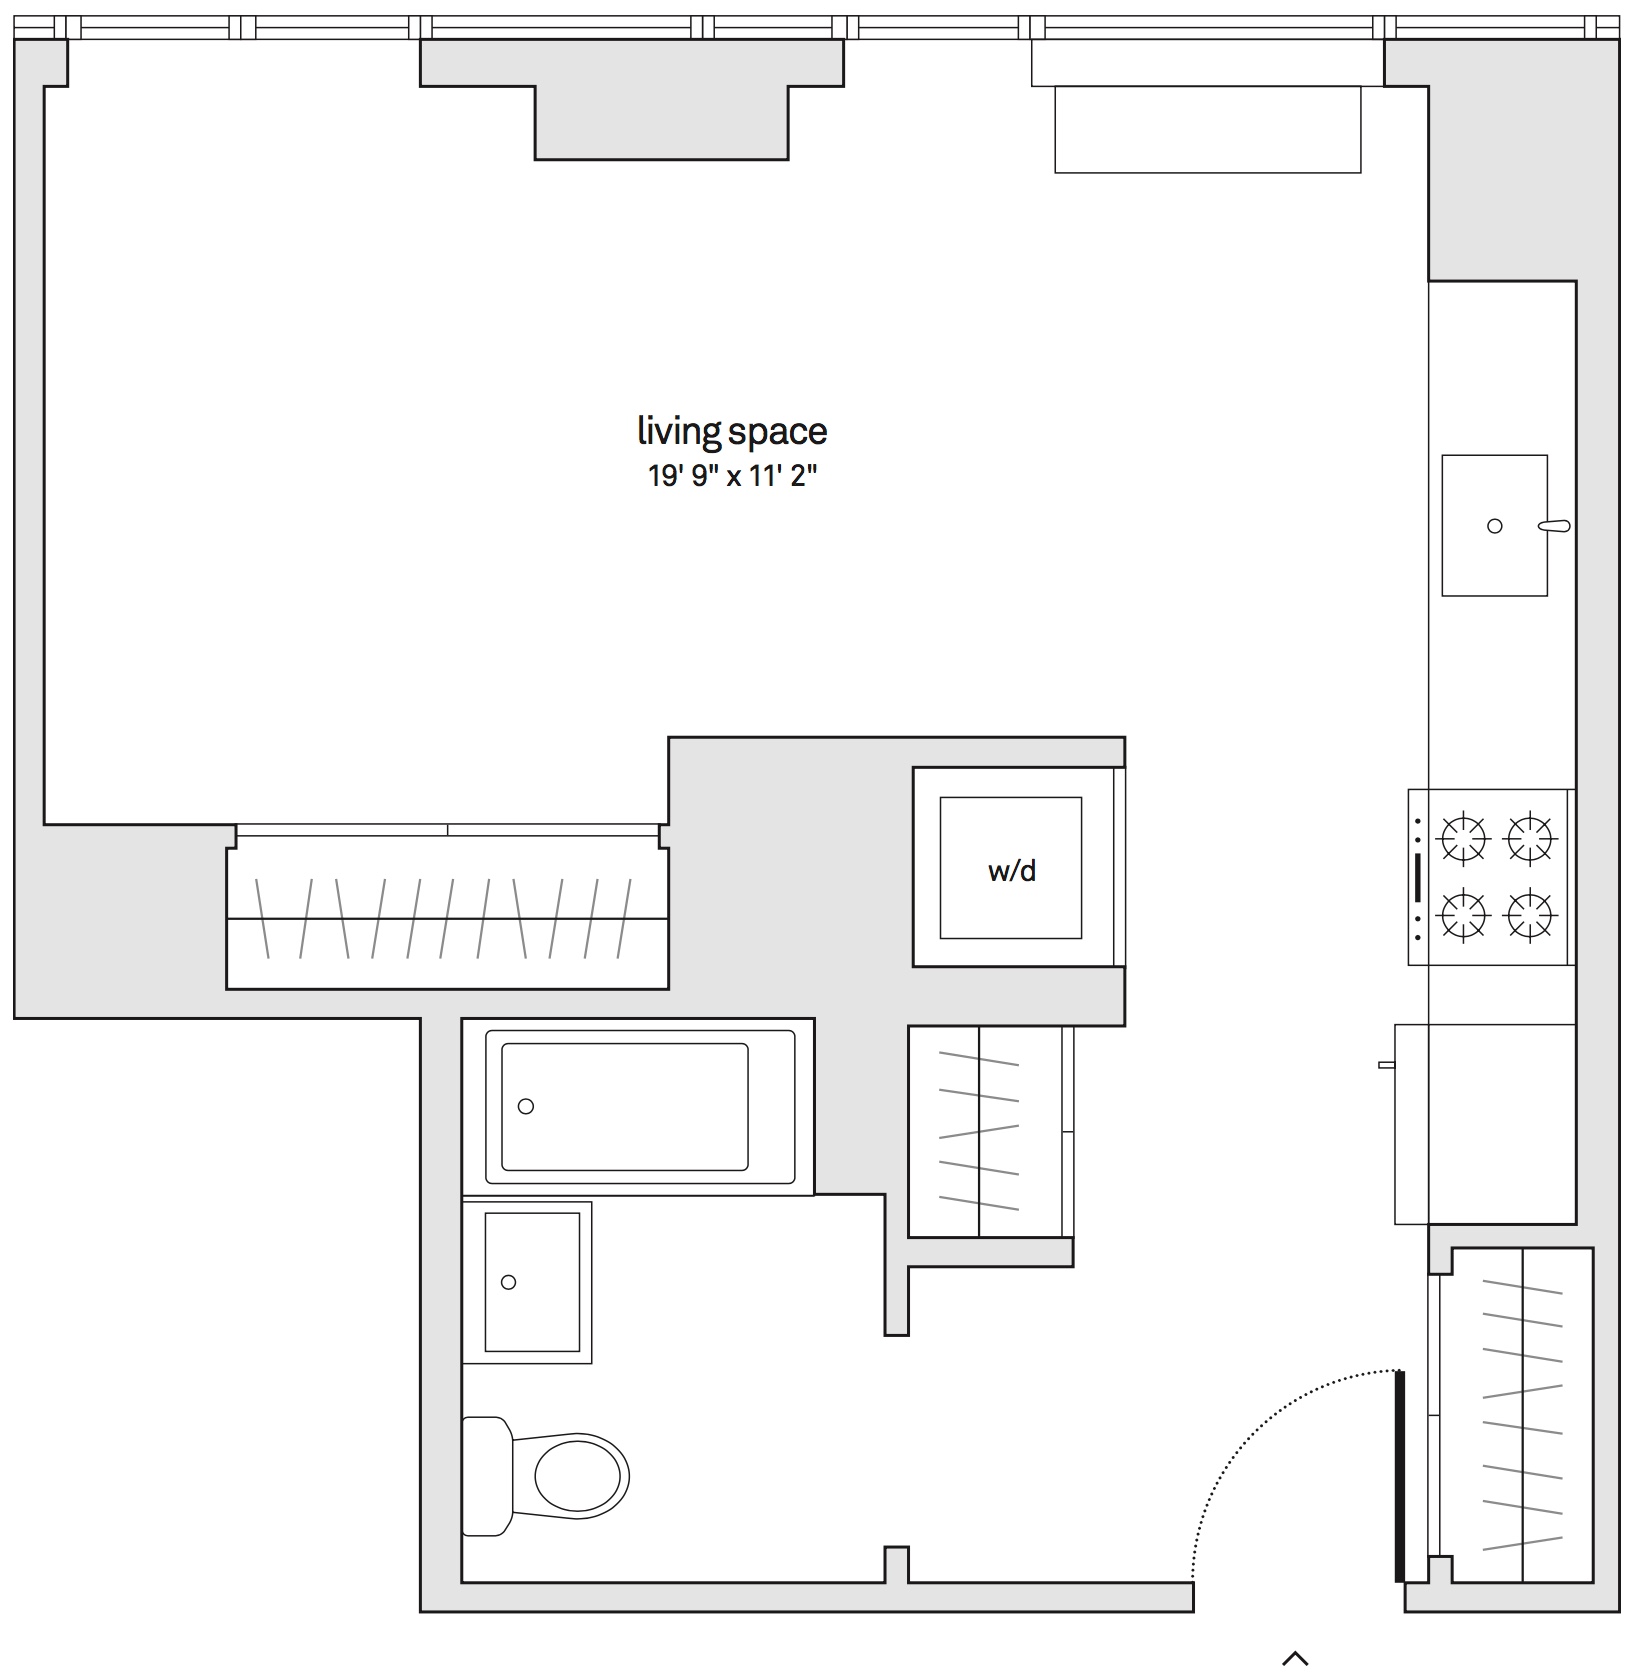 Floorplan of unit 37H with furniture.